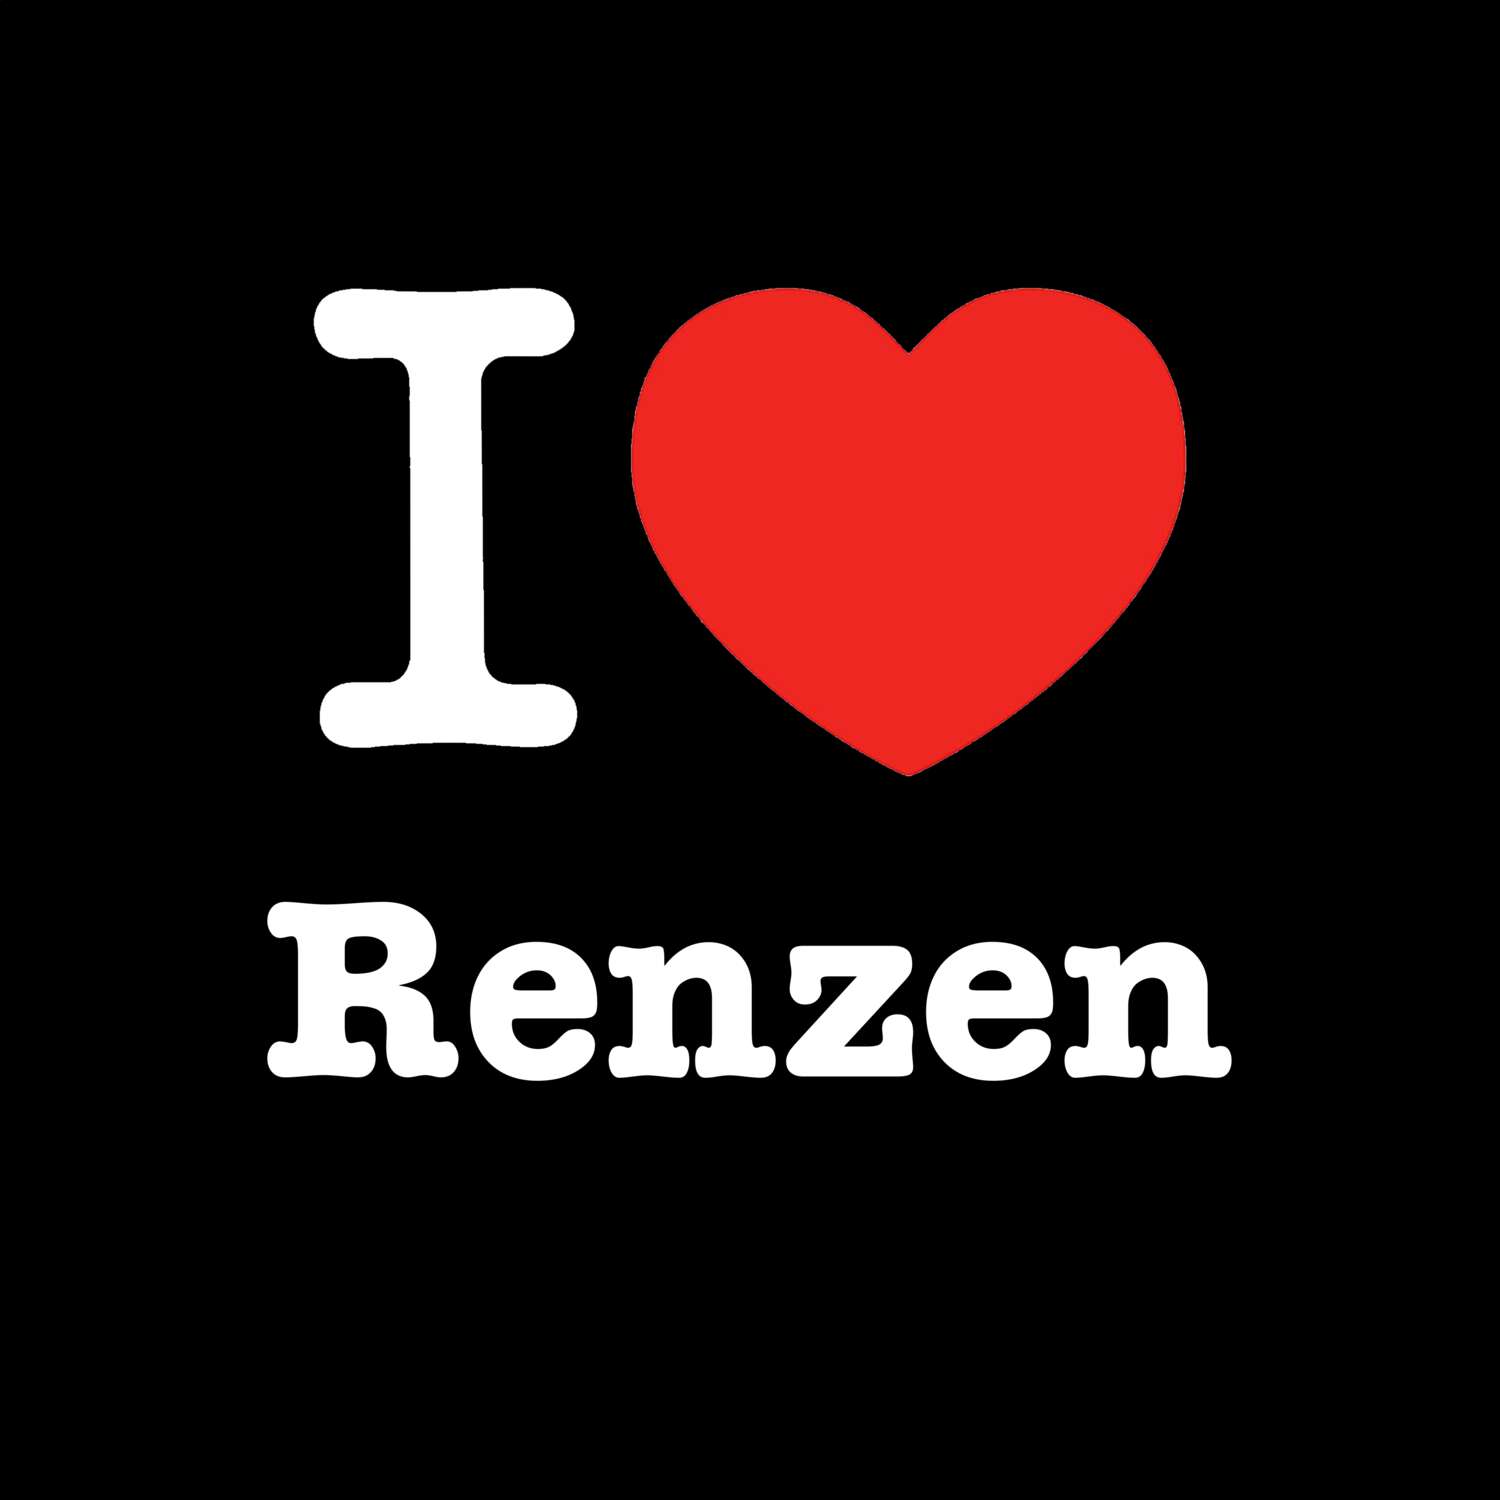 Renzen T-Shirt »I love«